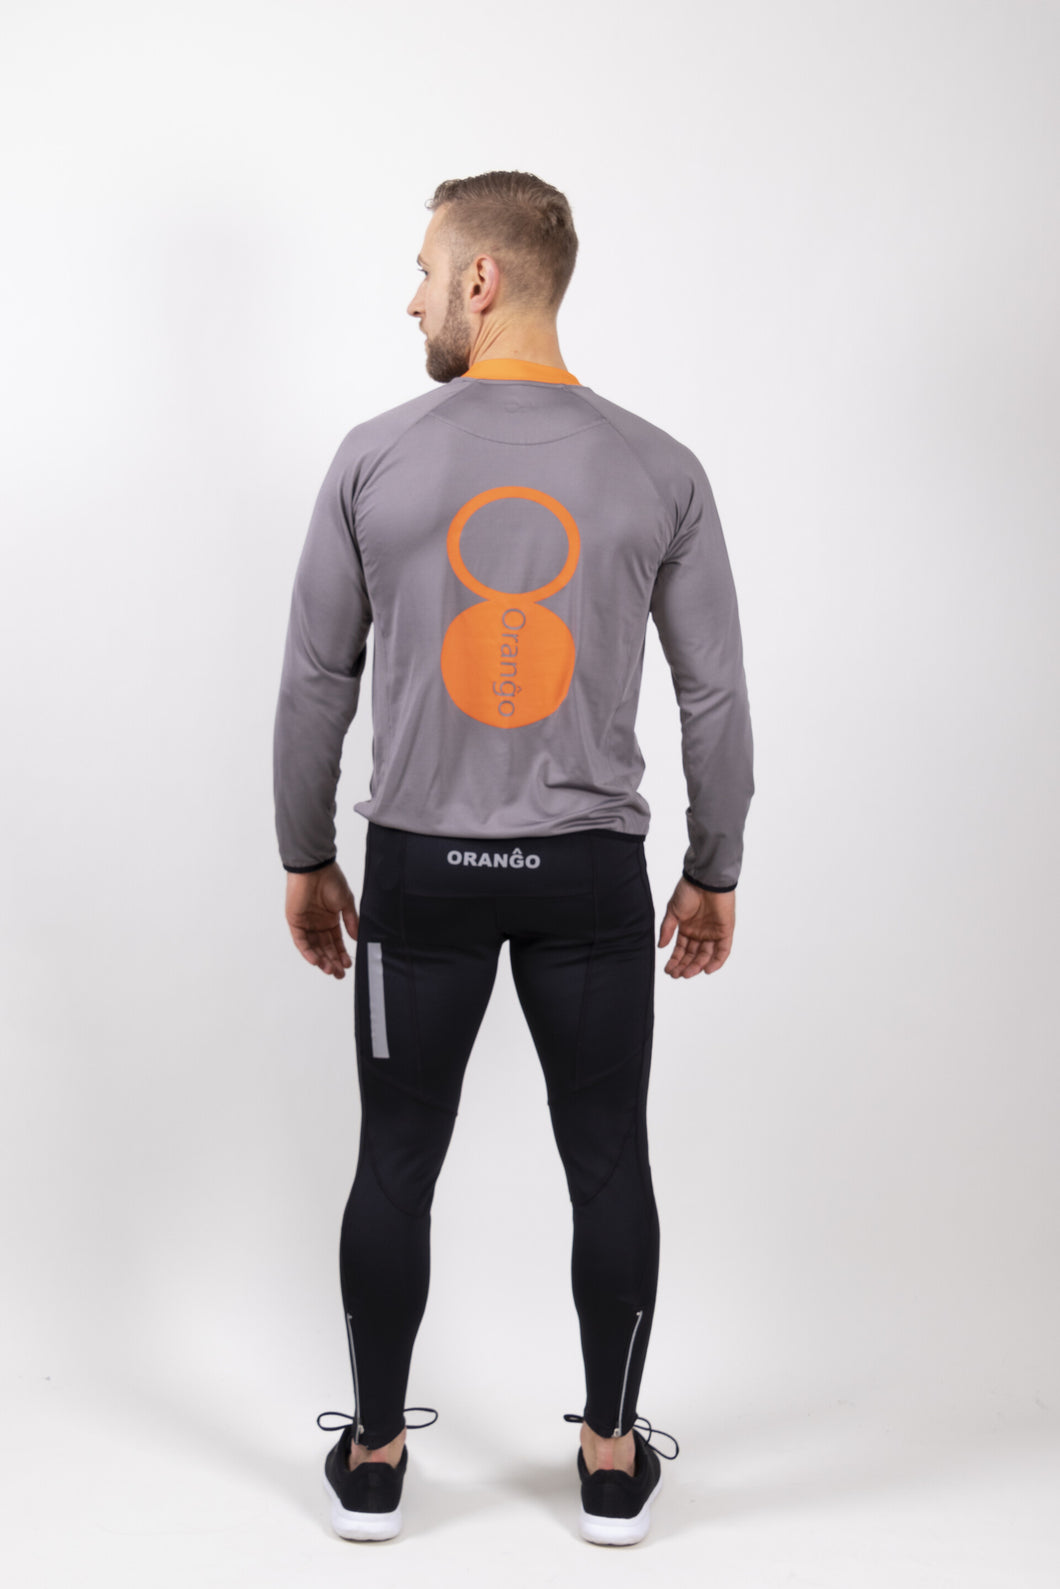 Orango Running - Mens T-shirt long sleeve - Steel Grey/Black/Orange - P010-106E